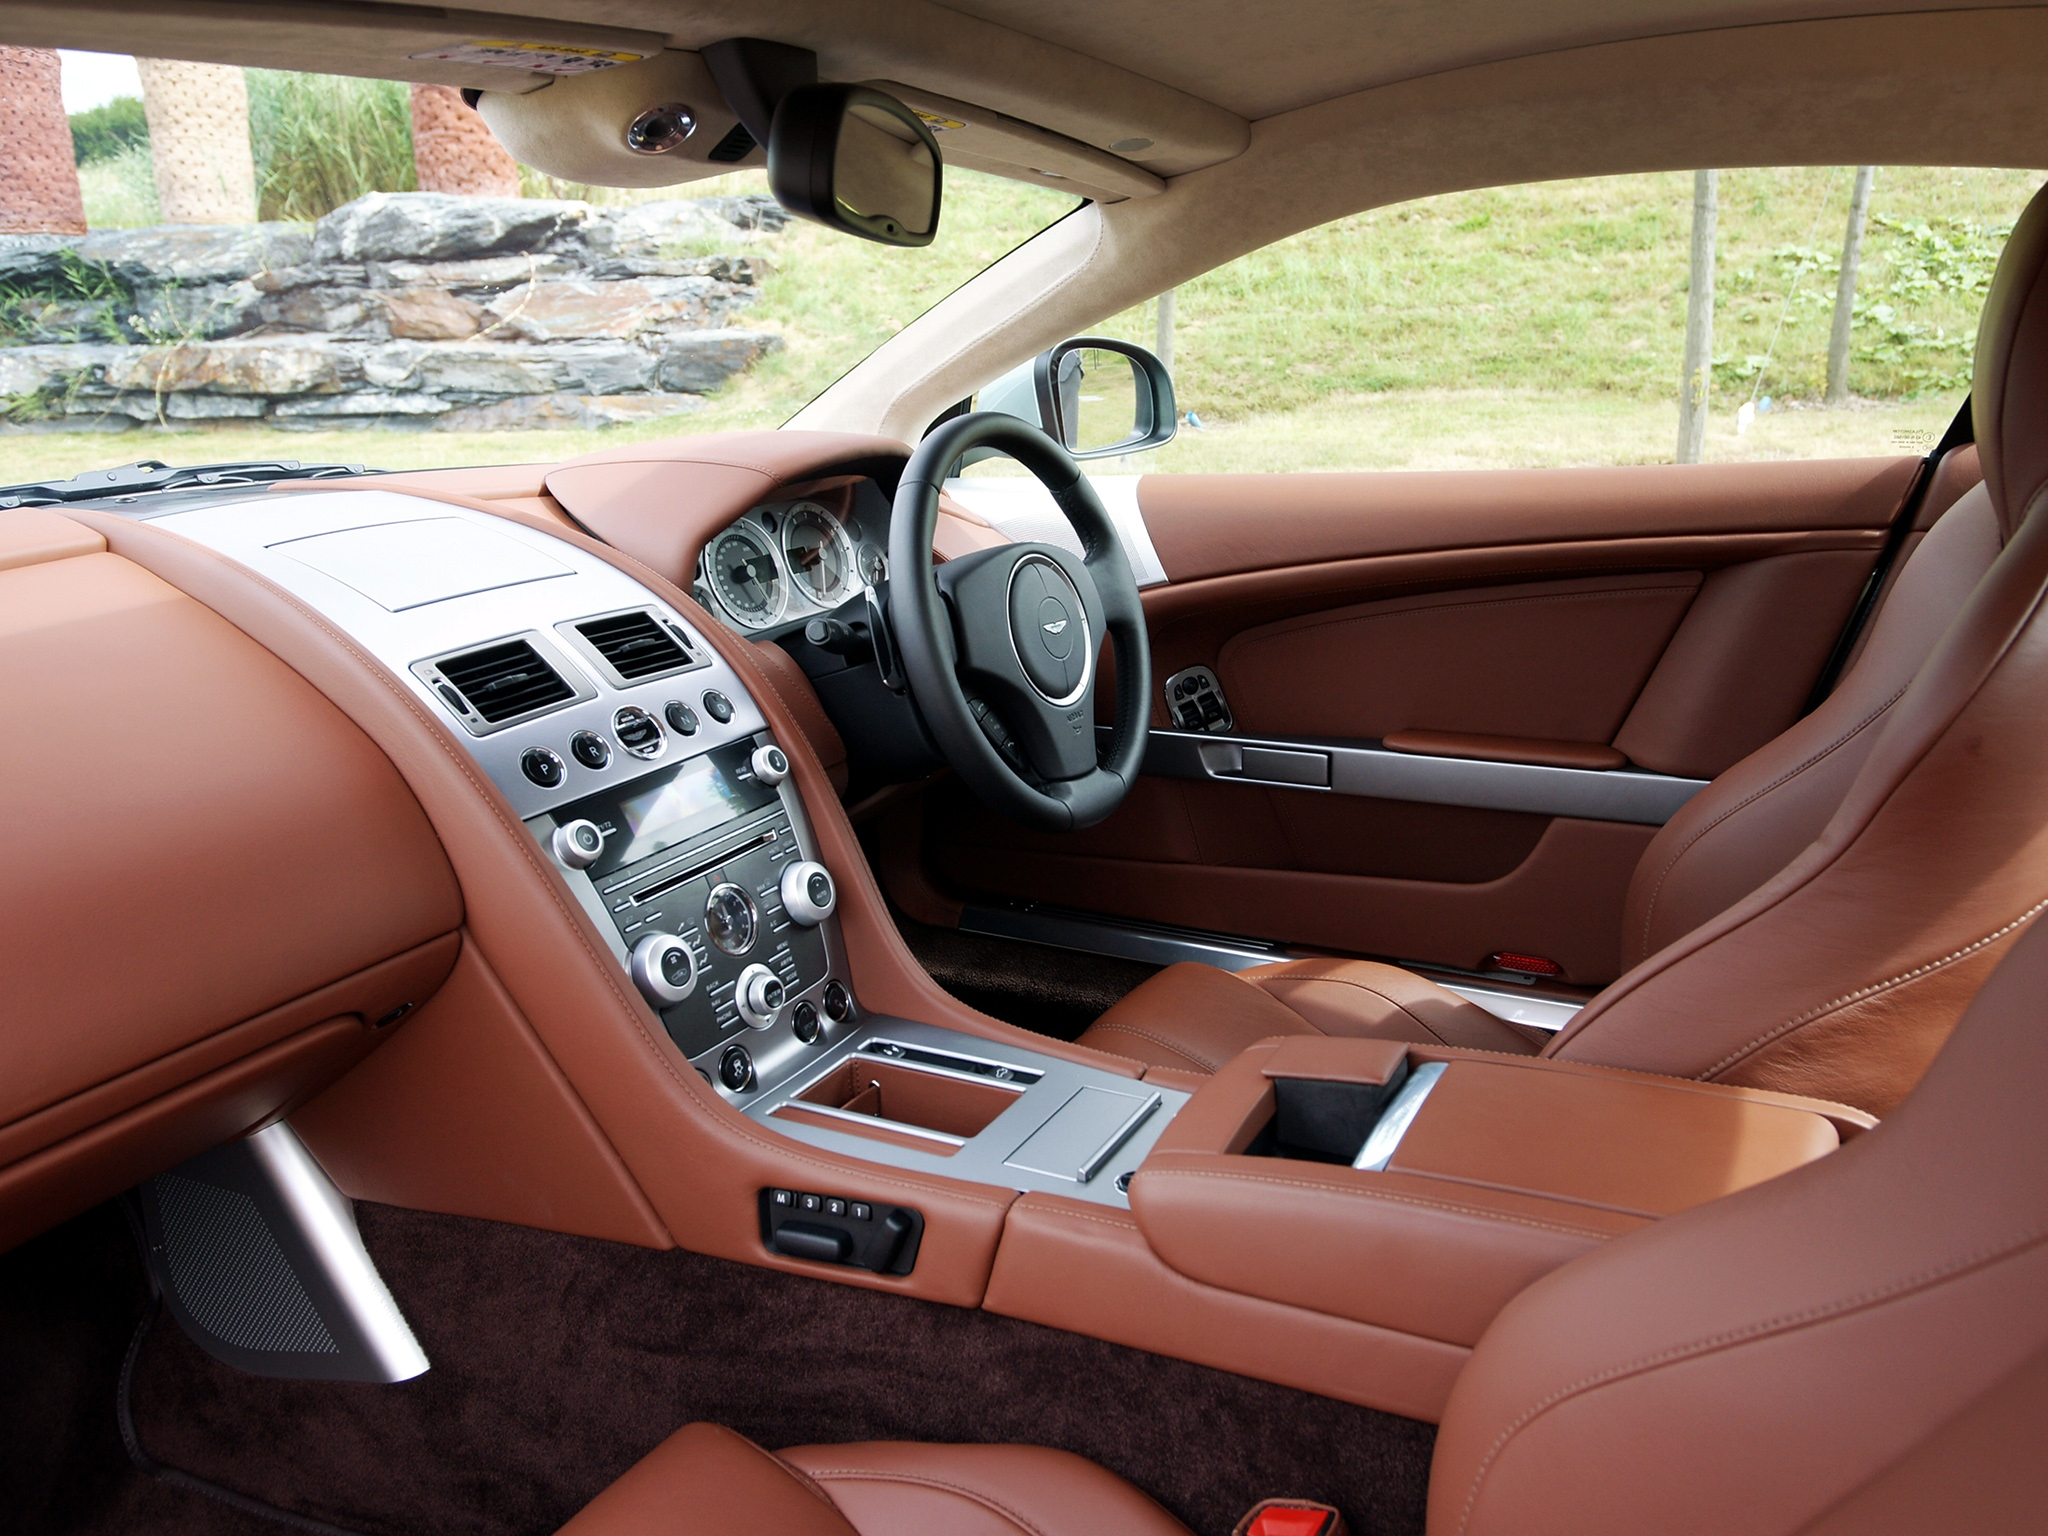 steering wheel, skin, salon, leather, interior, aston martin, cars, brown, rudder, speedometer, db9, 2010 images